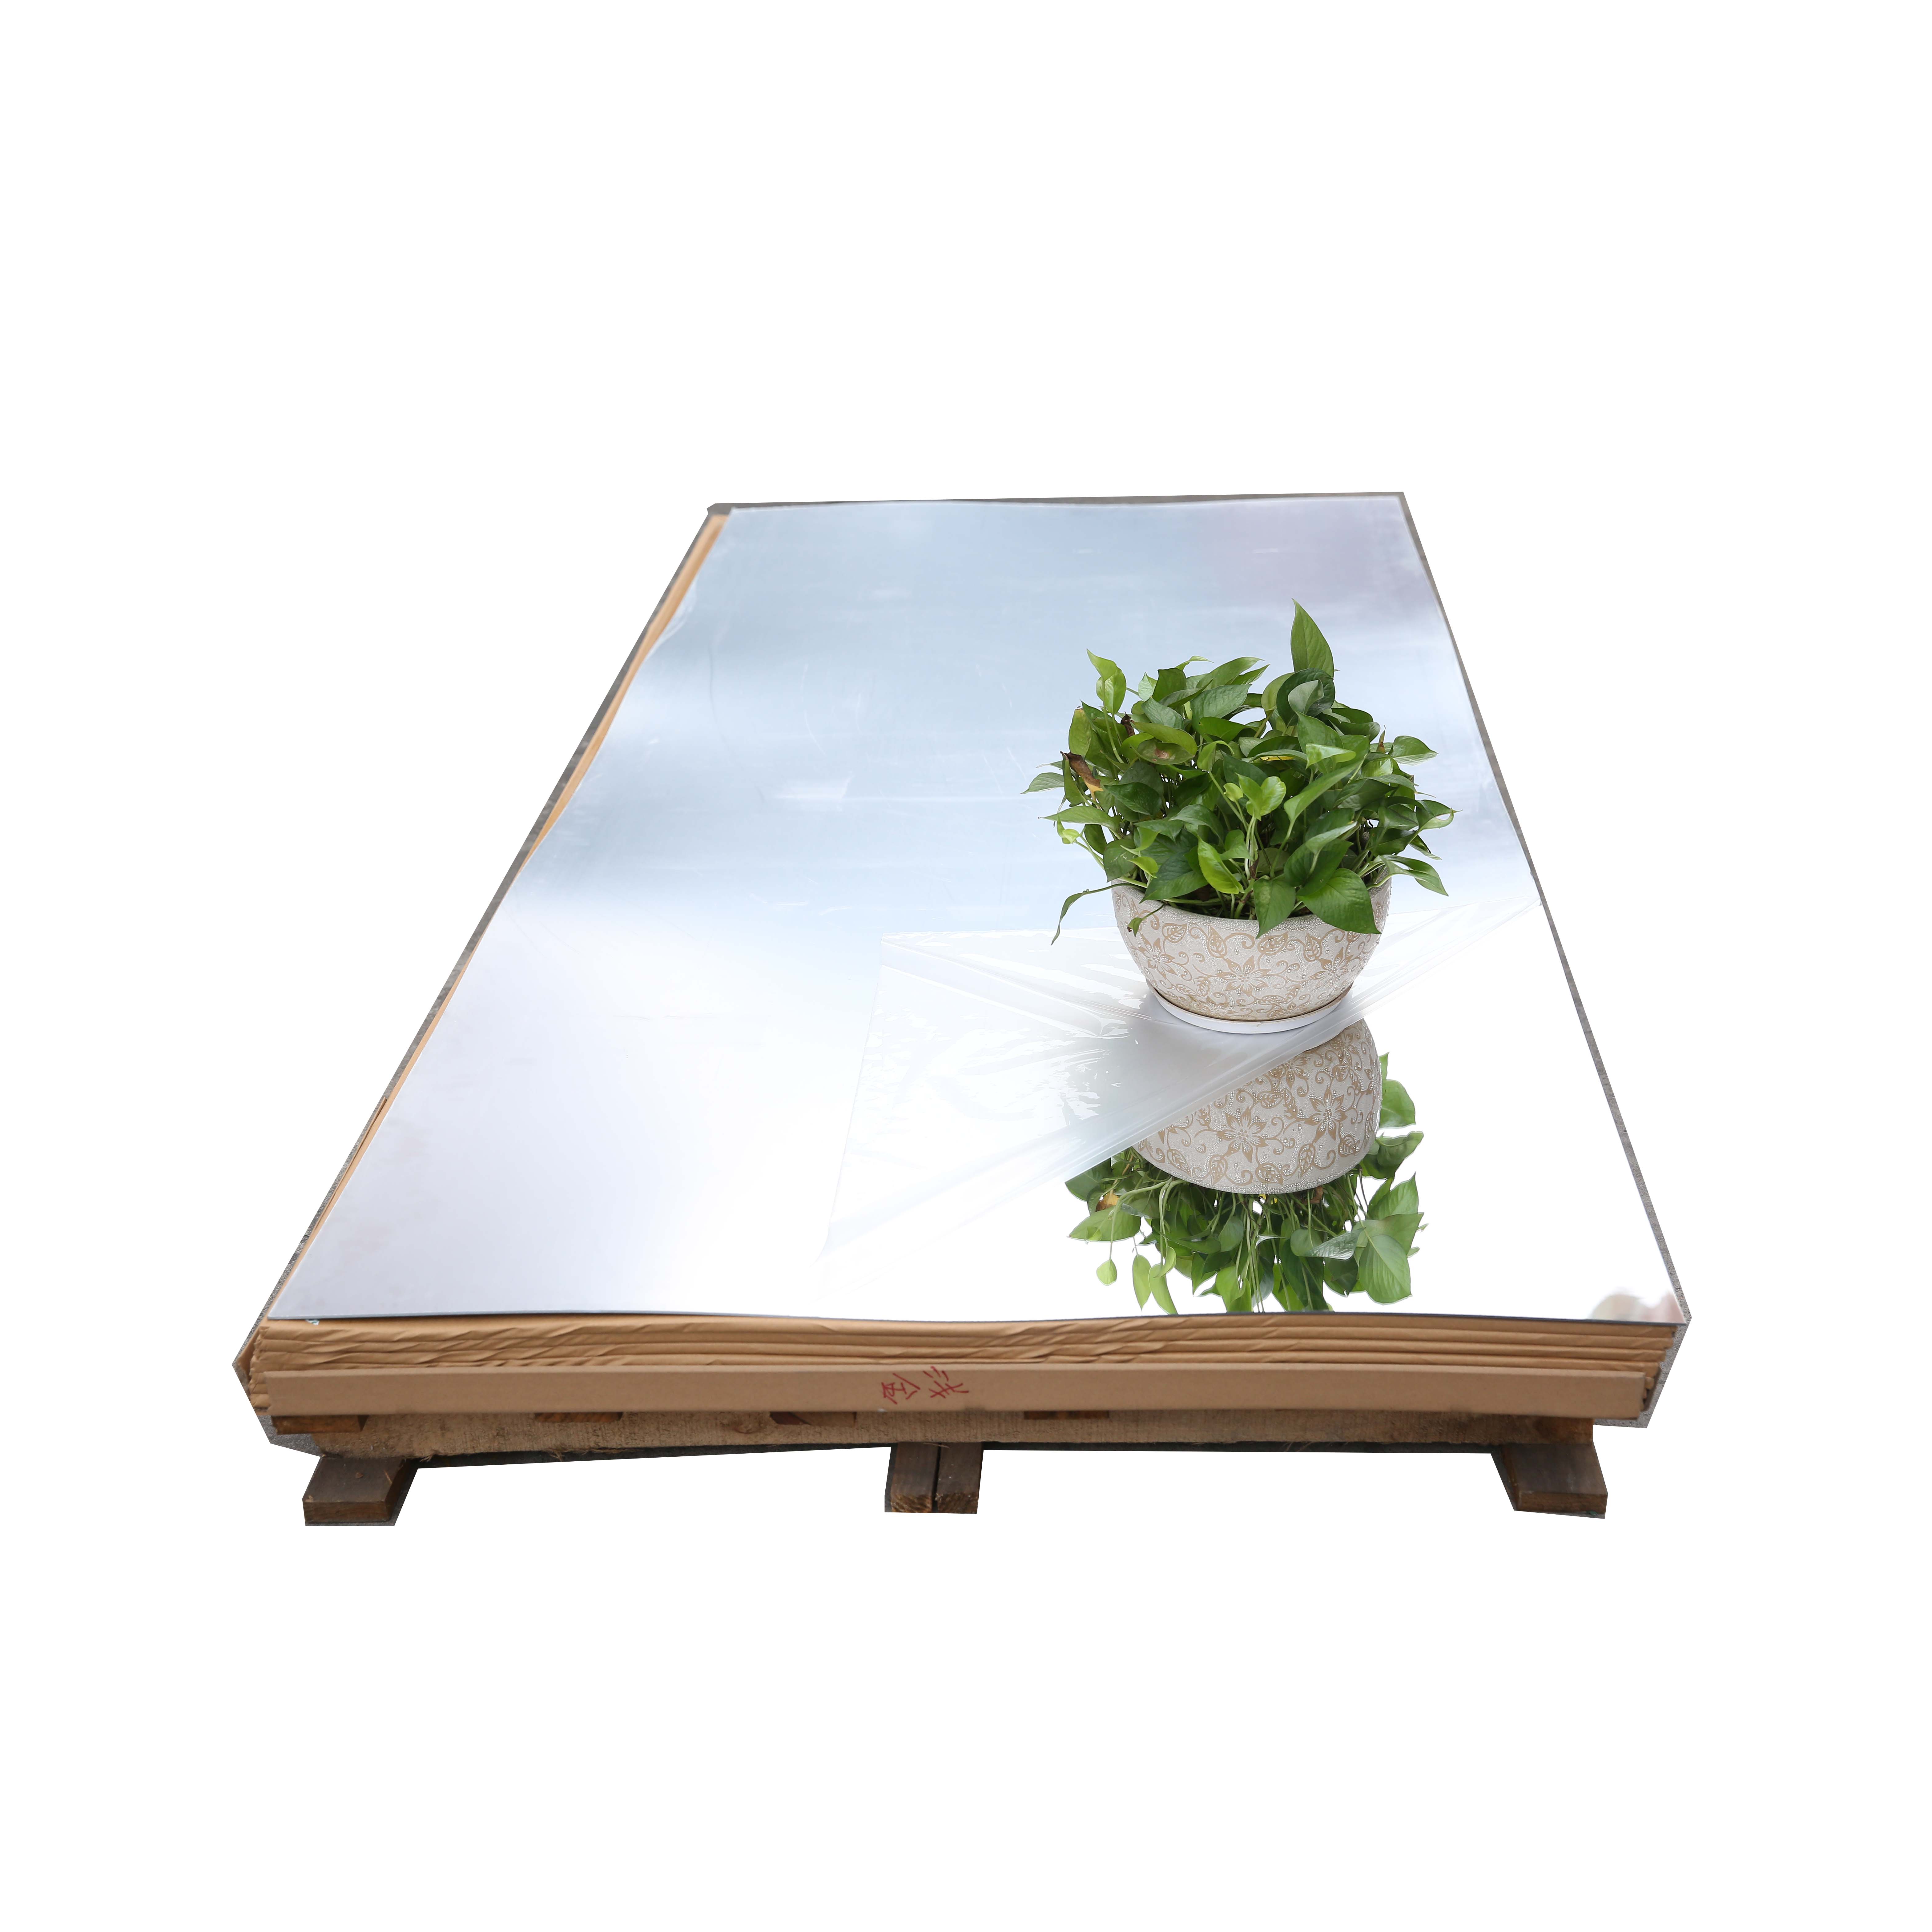 Acrylic Mirrored Console Table Mirror Acrylic Tile Sheet Acrylic Crystal Mirror Rhinestones